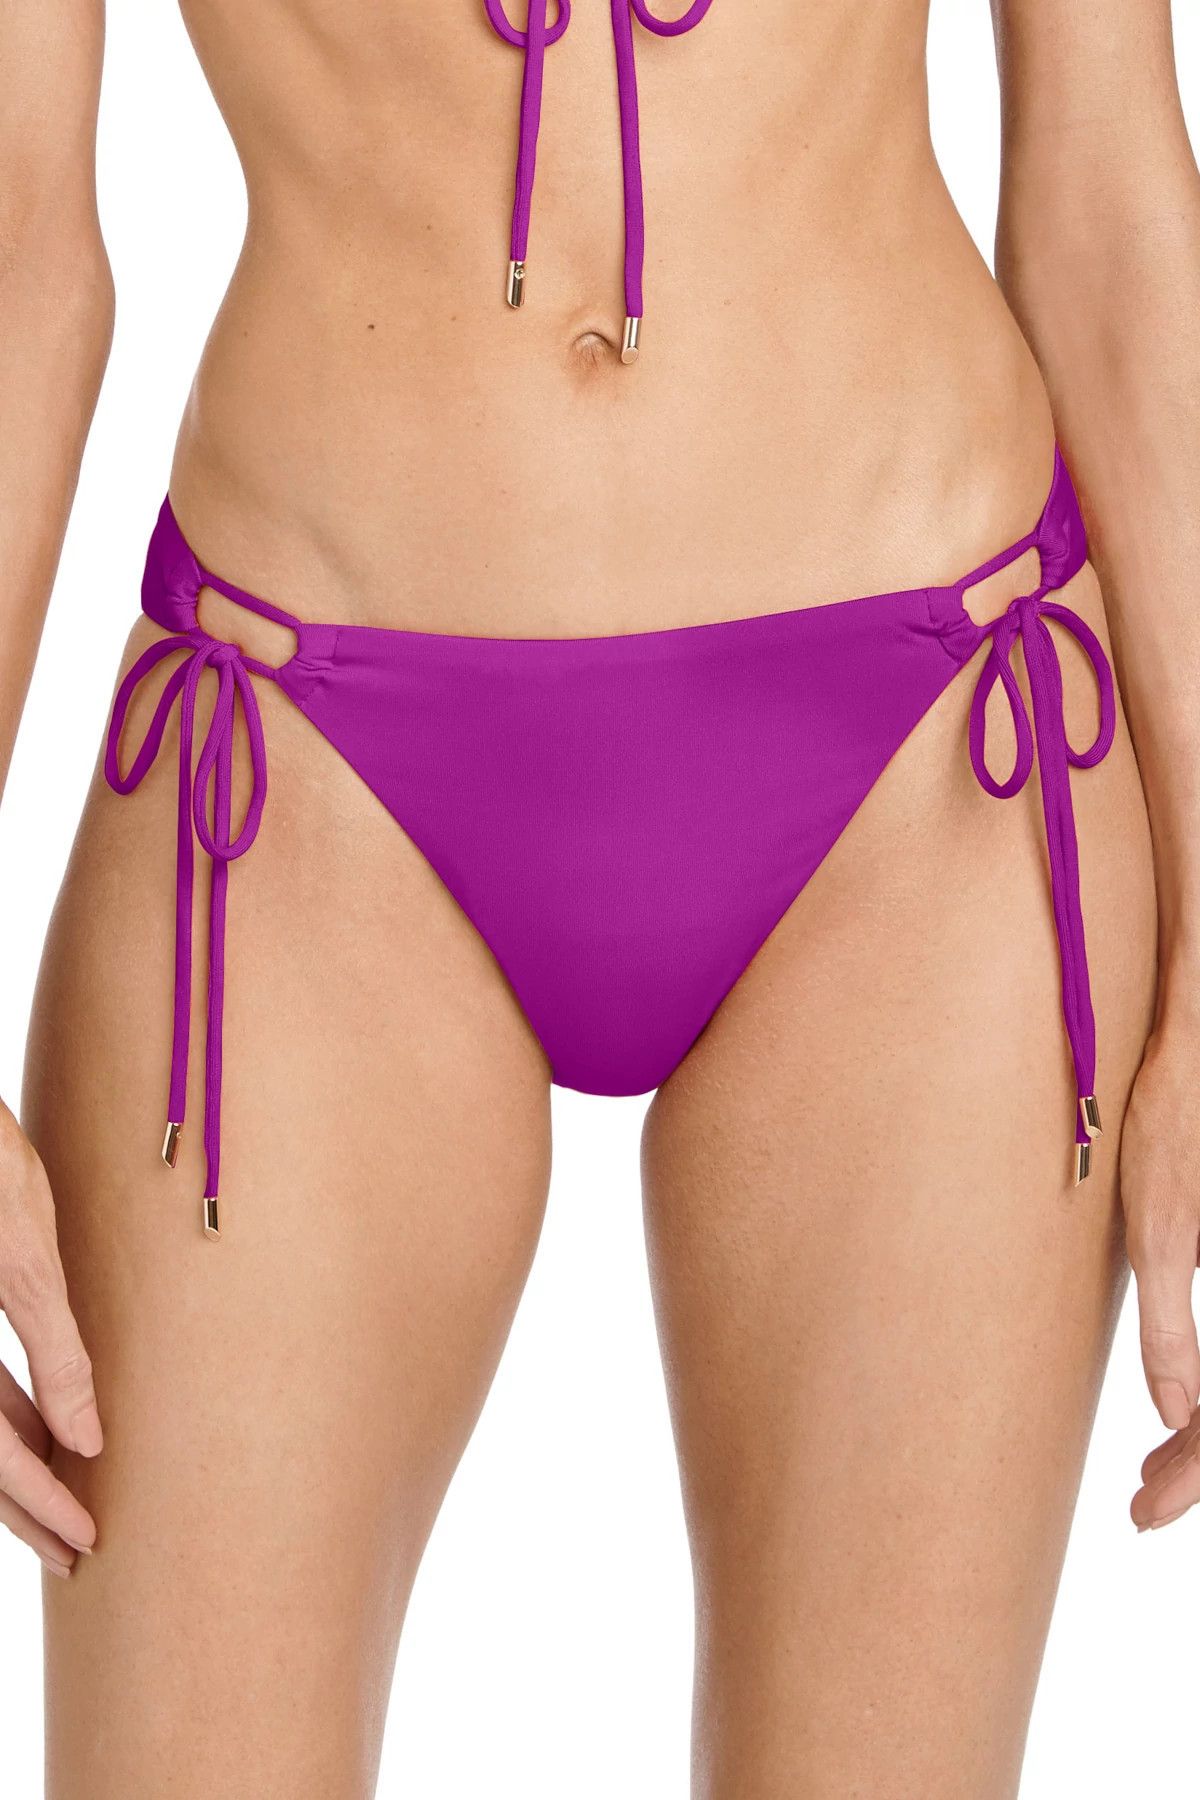 Aubrey Loop Tie Side Hipster Bikini Bottom | Everything But Water